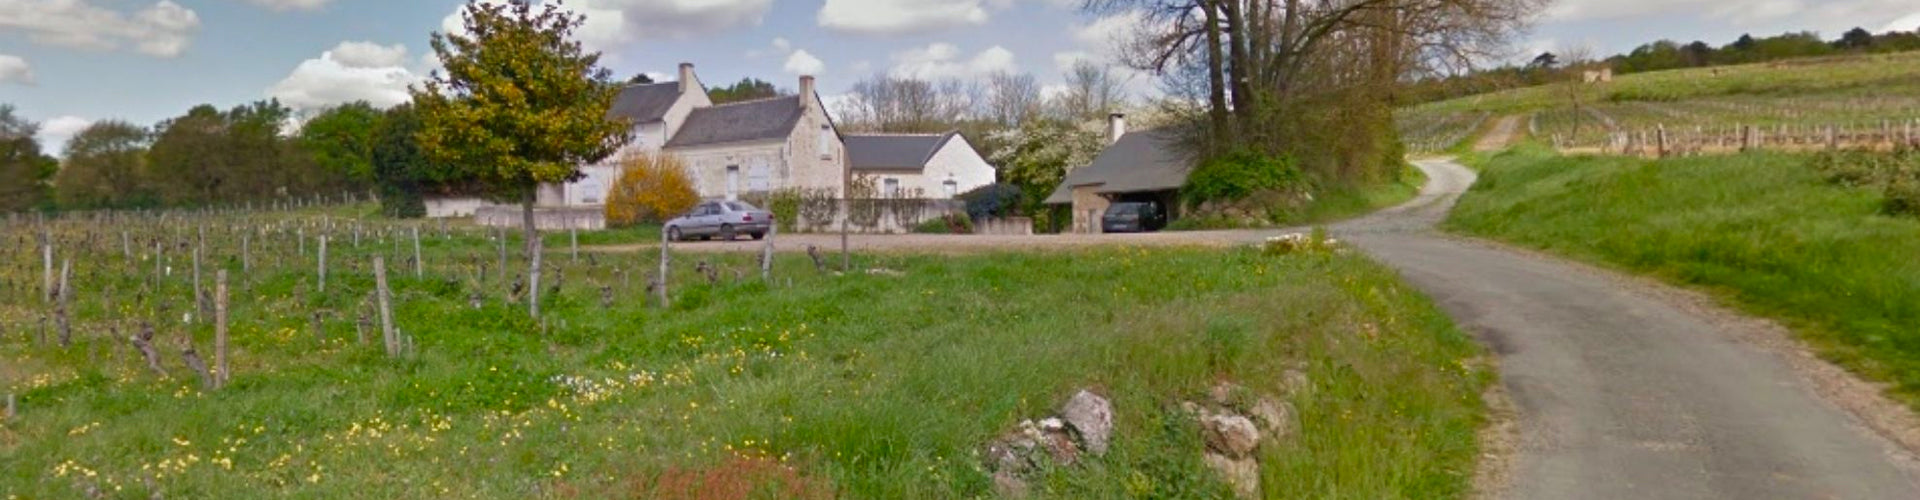 Jacky Blot's Domaine de la Butte property in Bourgueil in the Loire Valley